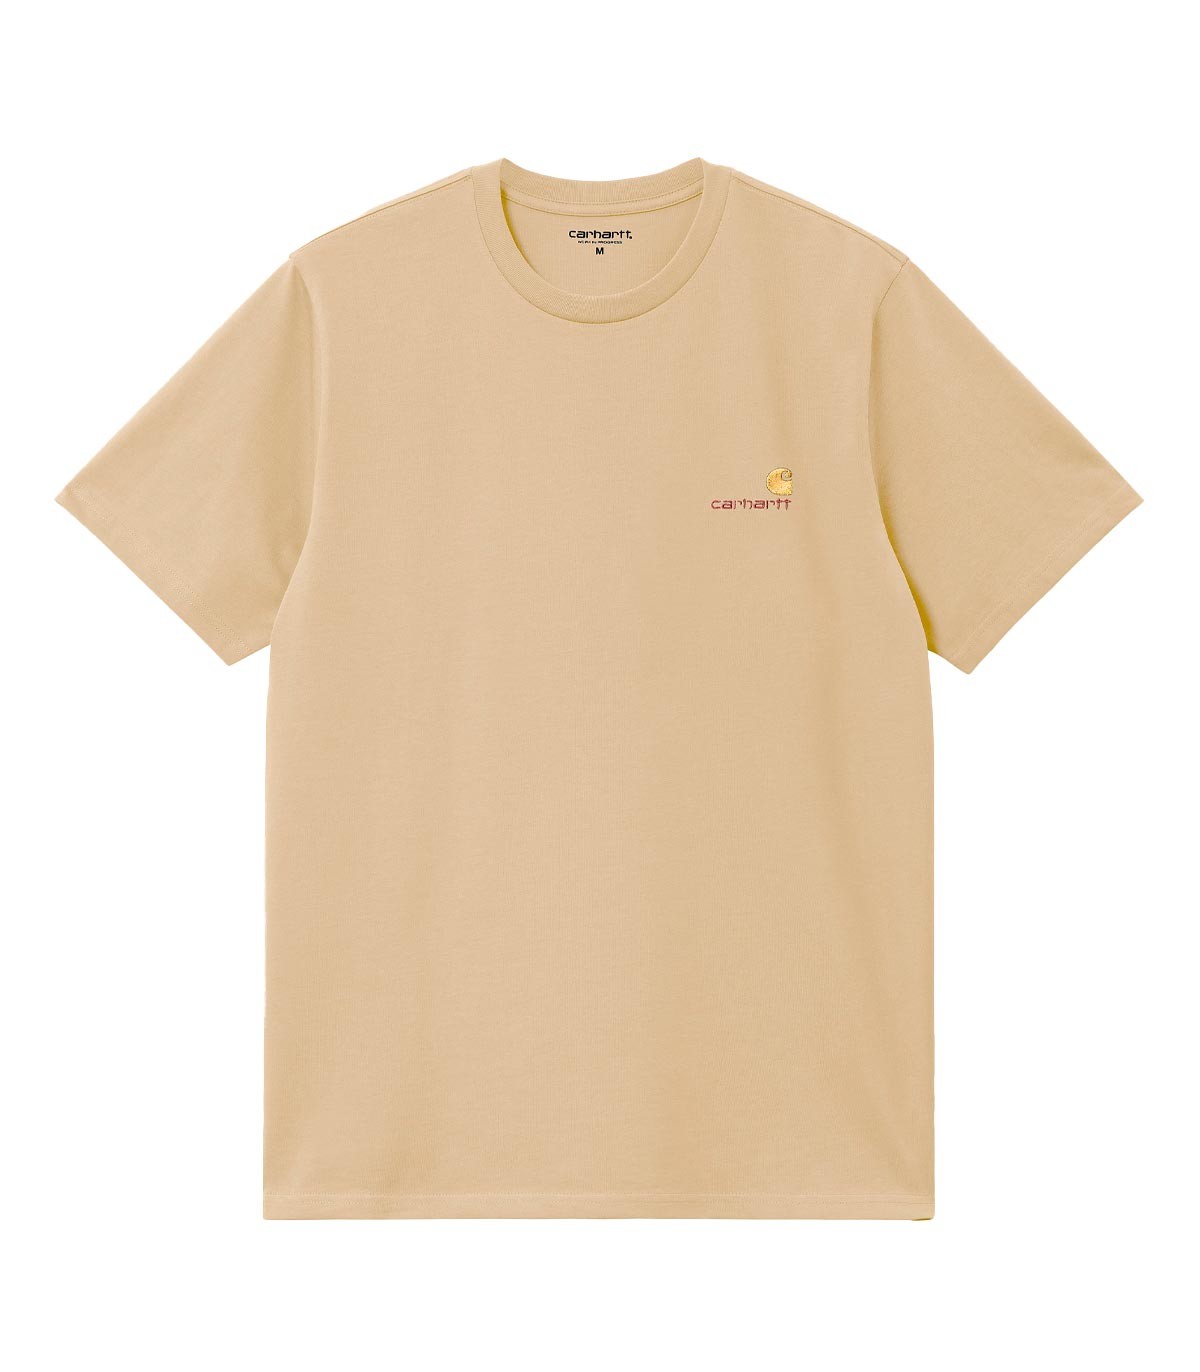 Carhartt WIP - Camiseta S/S American Script - Beige